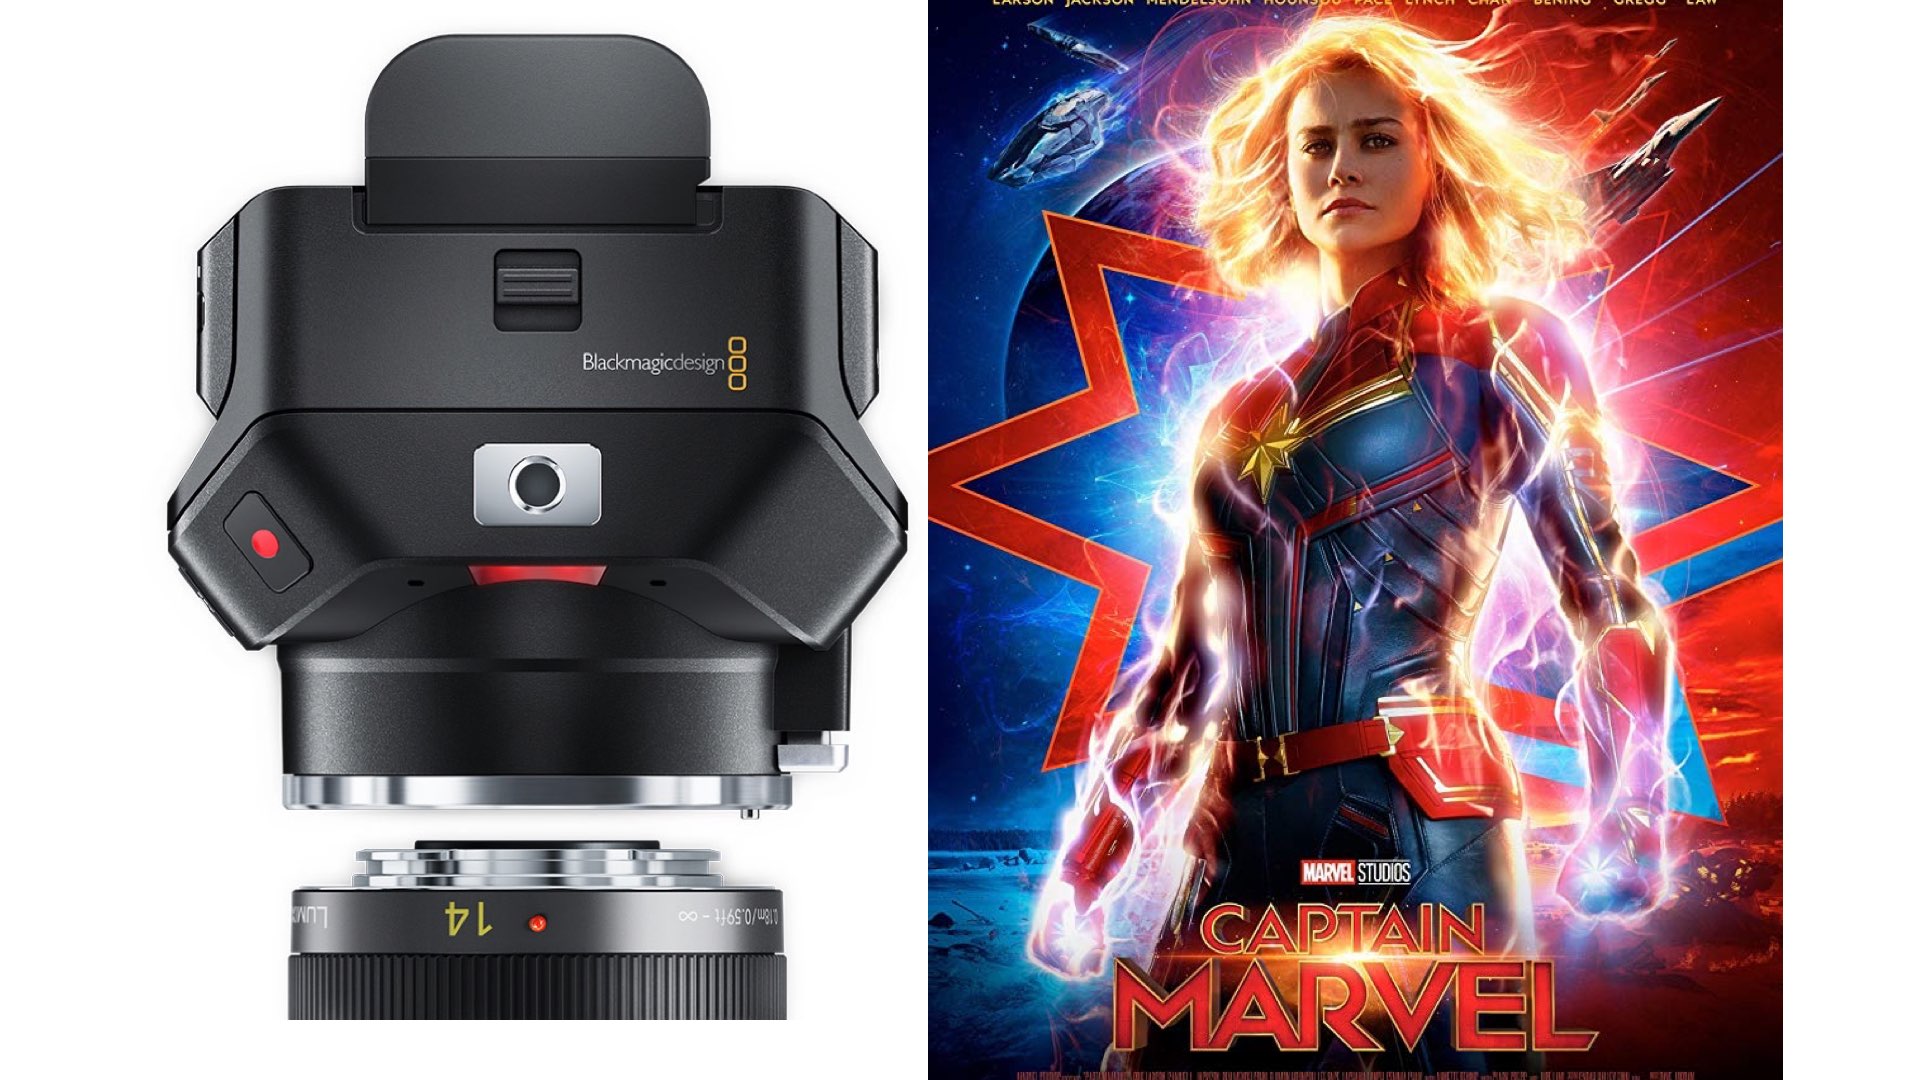 Blackmagic Design Micro Cinema Camera & Captain Marvel